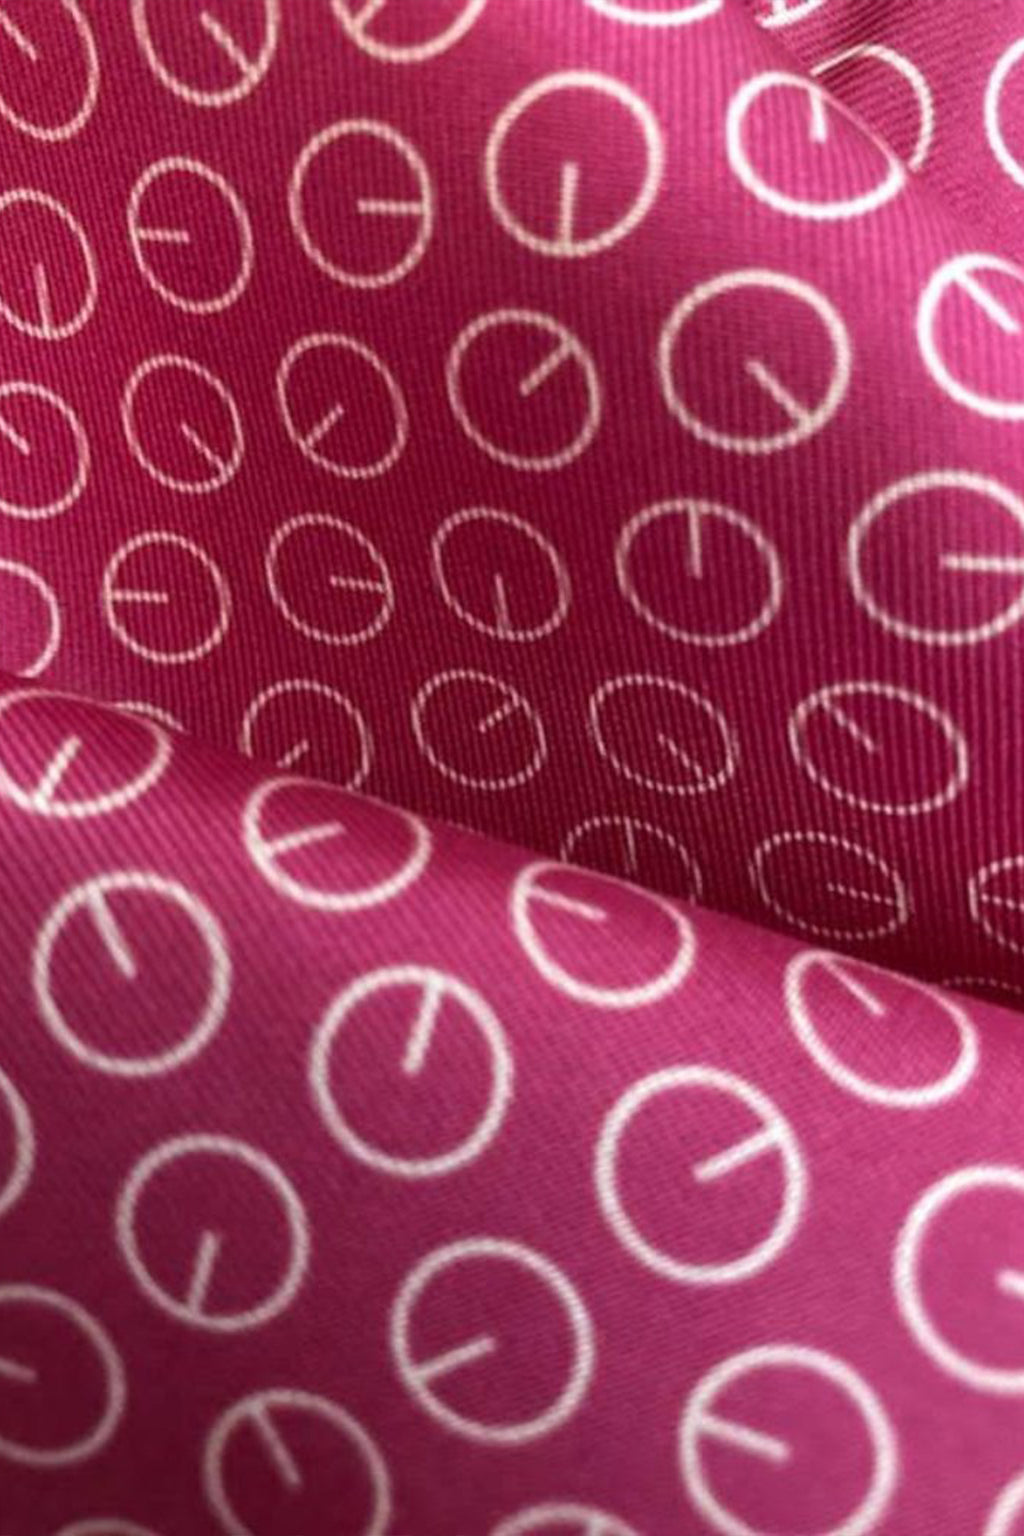 Pink silk scarf, printed sundial